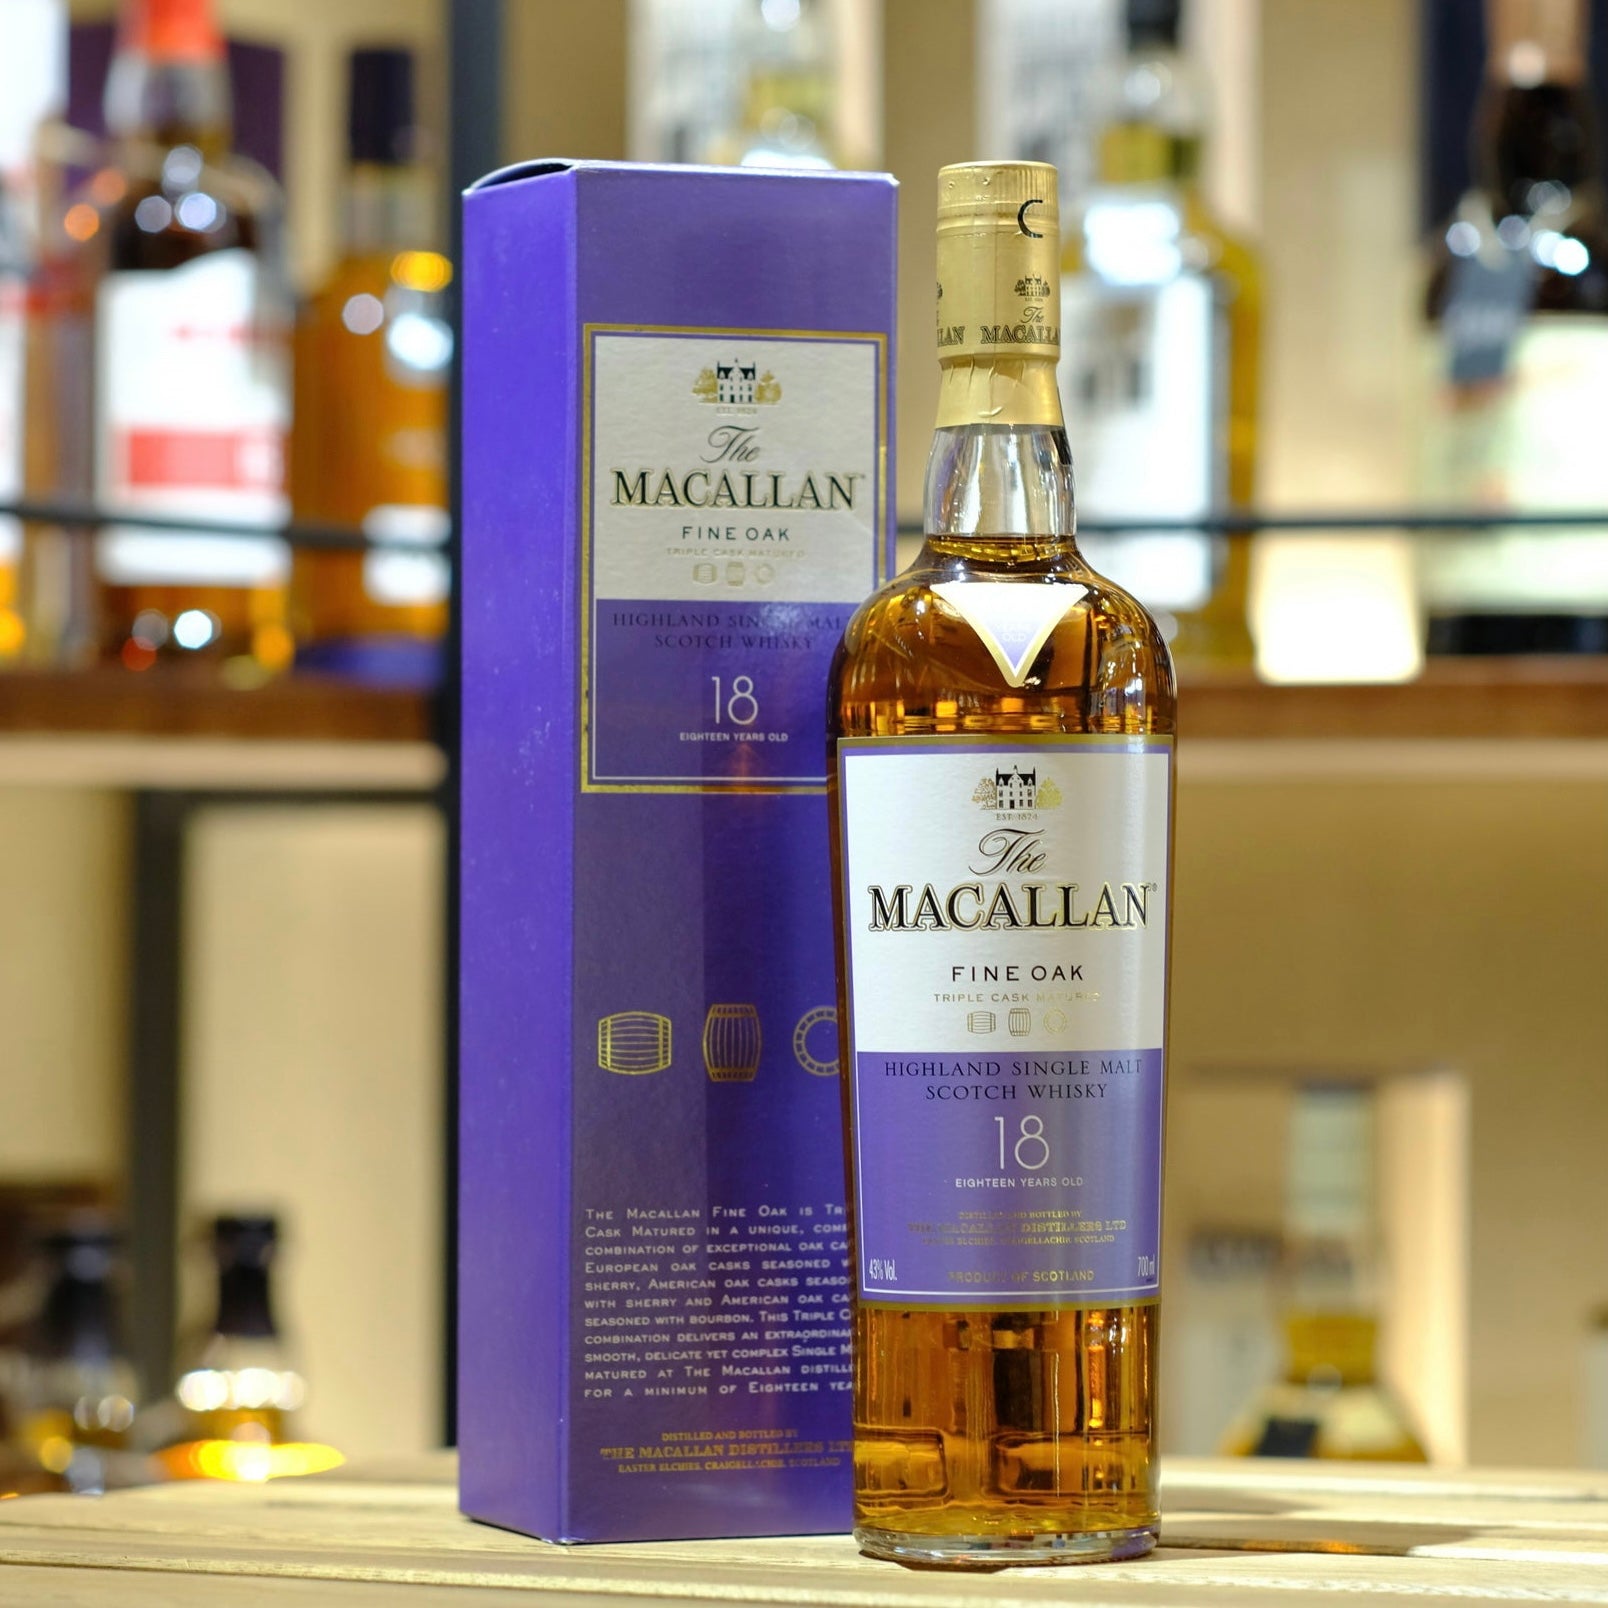 The Macallan 18 Year Old Fine Oak Single Malt Scotch Whisky